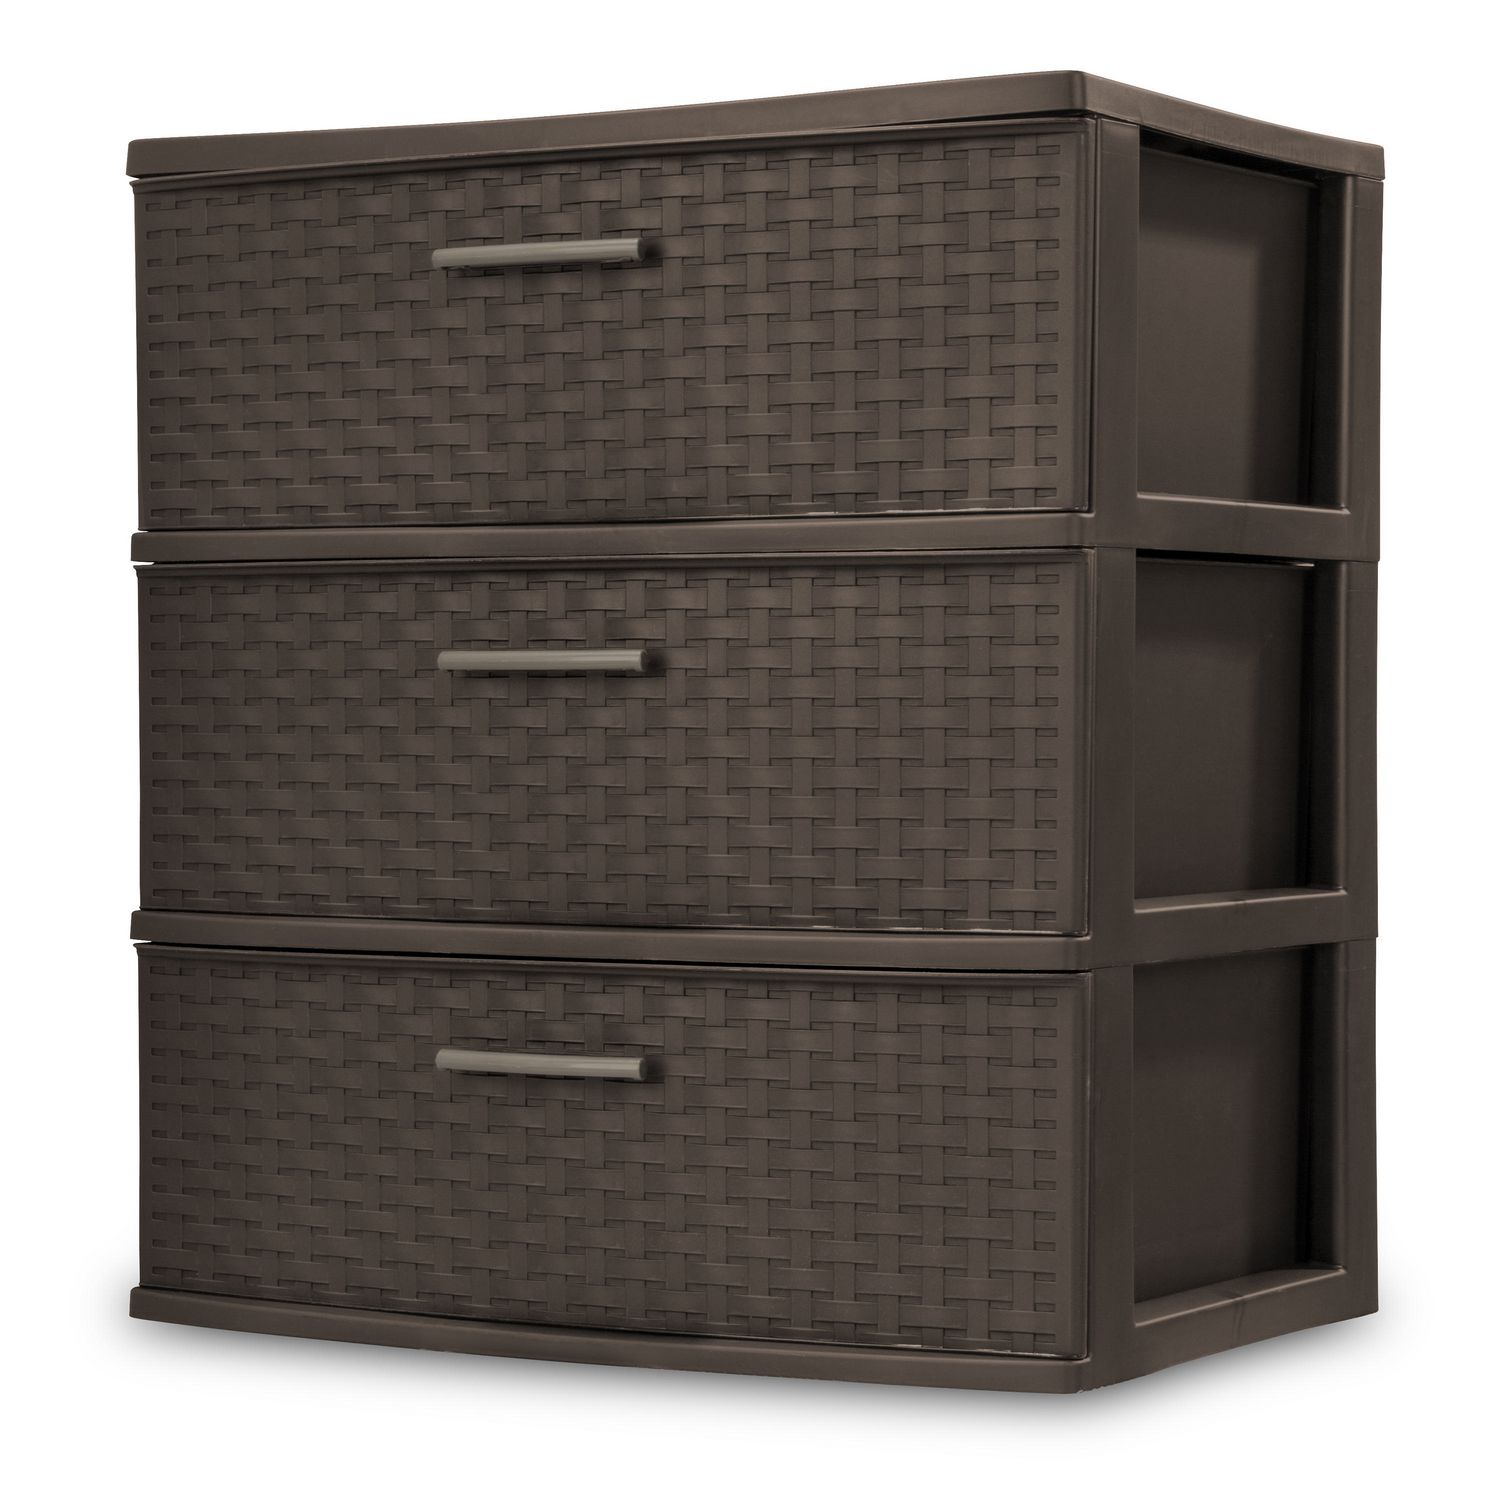 Which retailers sell sturdy plastic drawer storage bins?